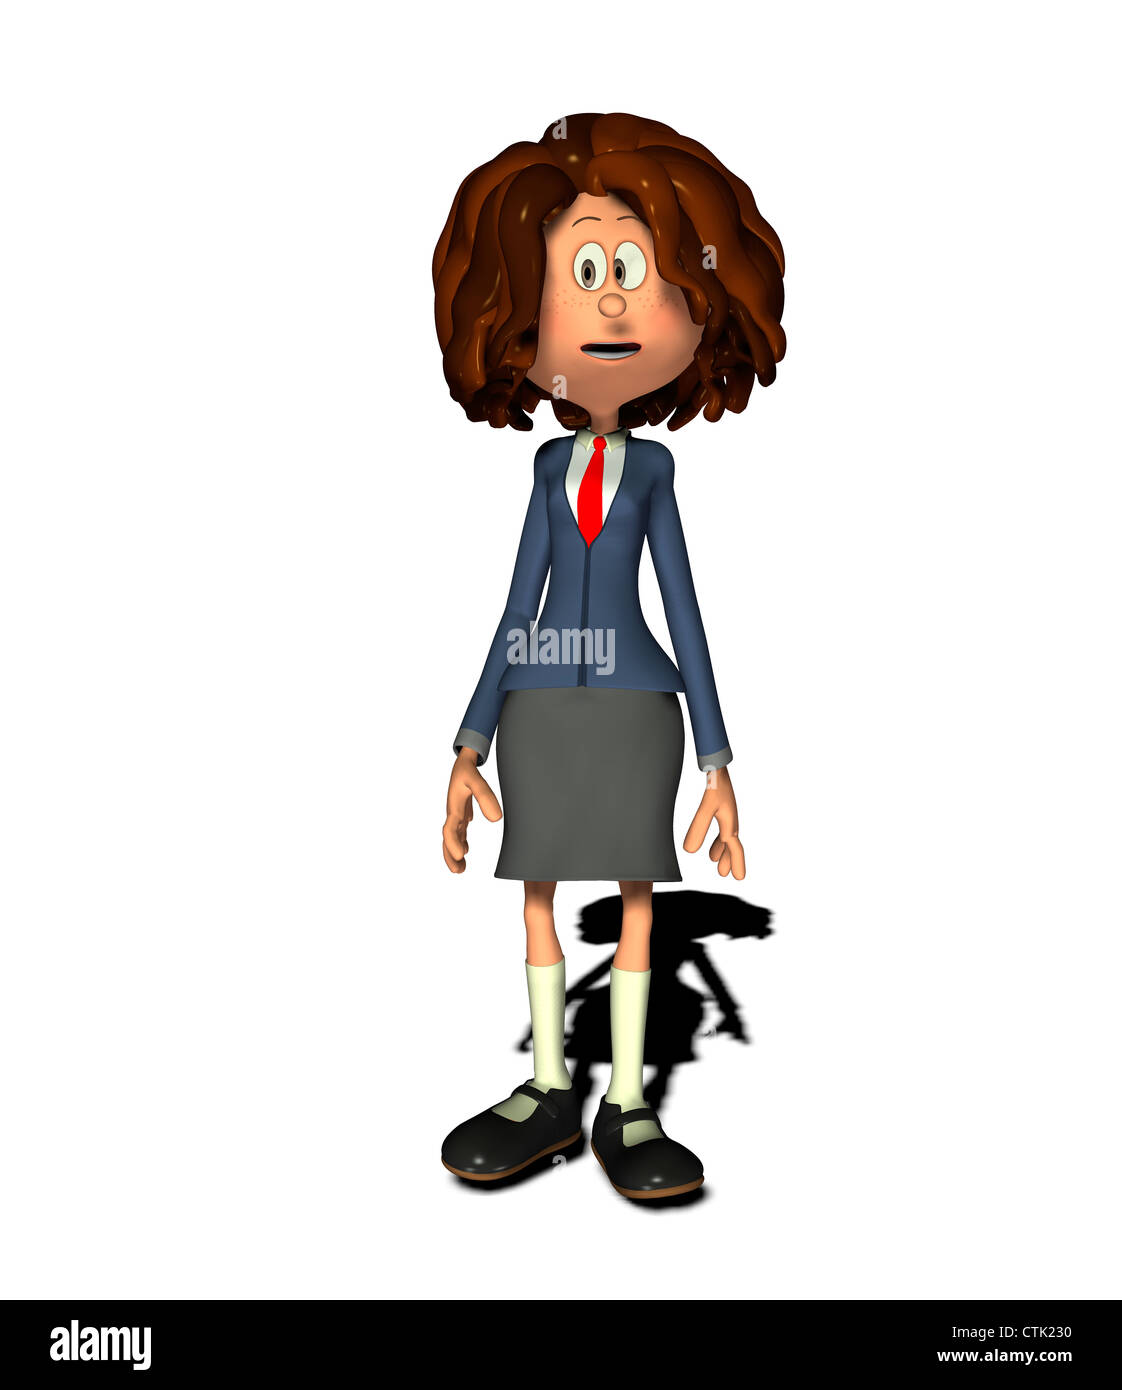 Cartoon figure business woman Stock Photo